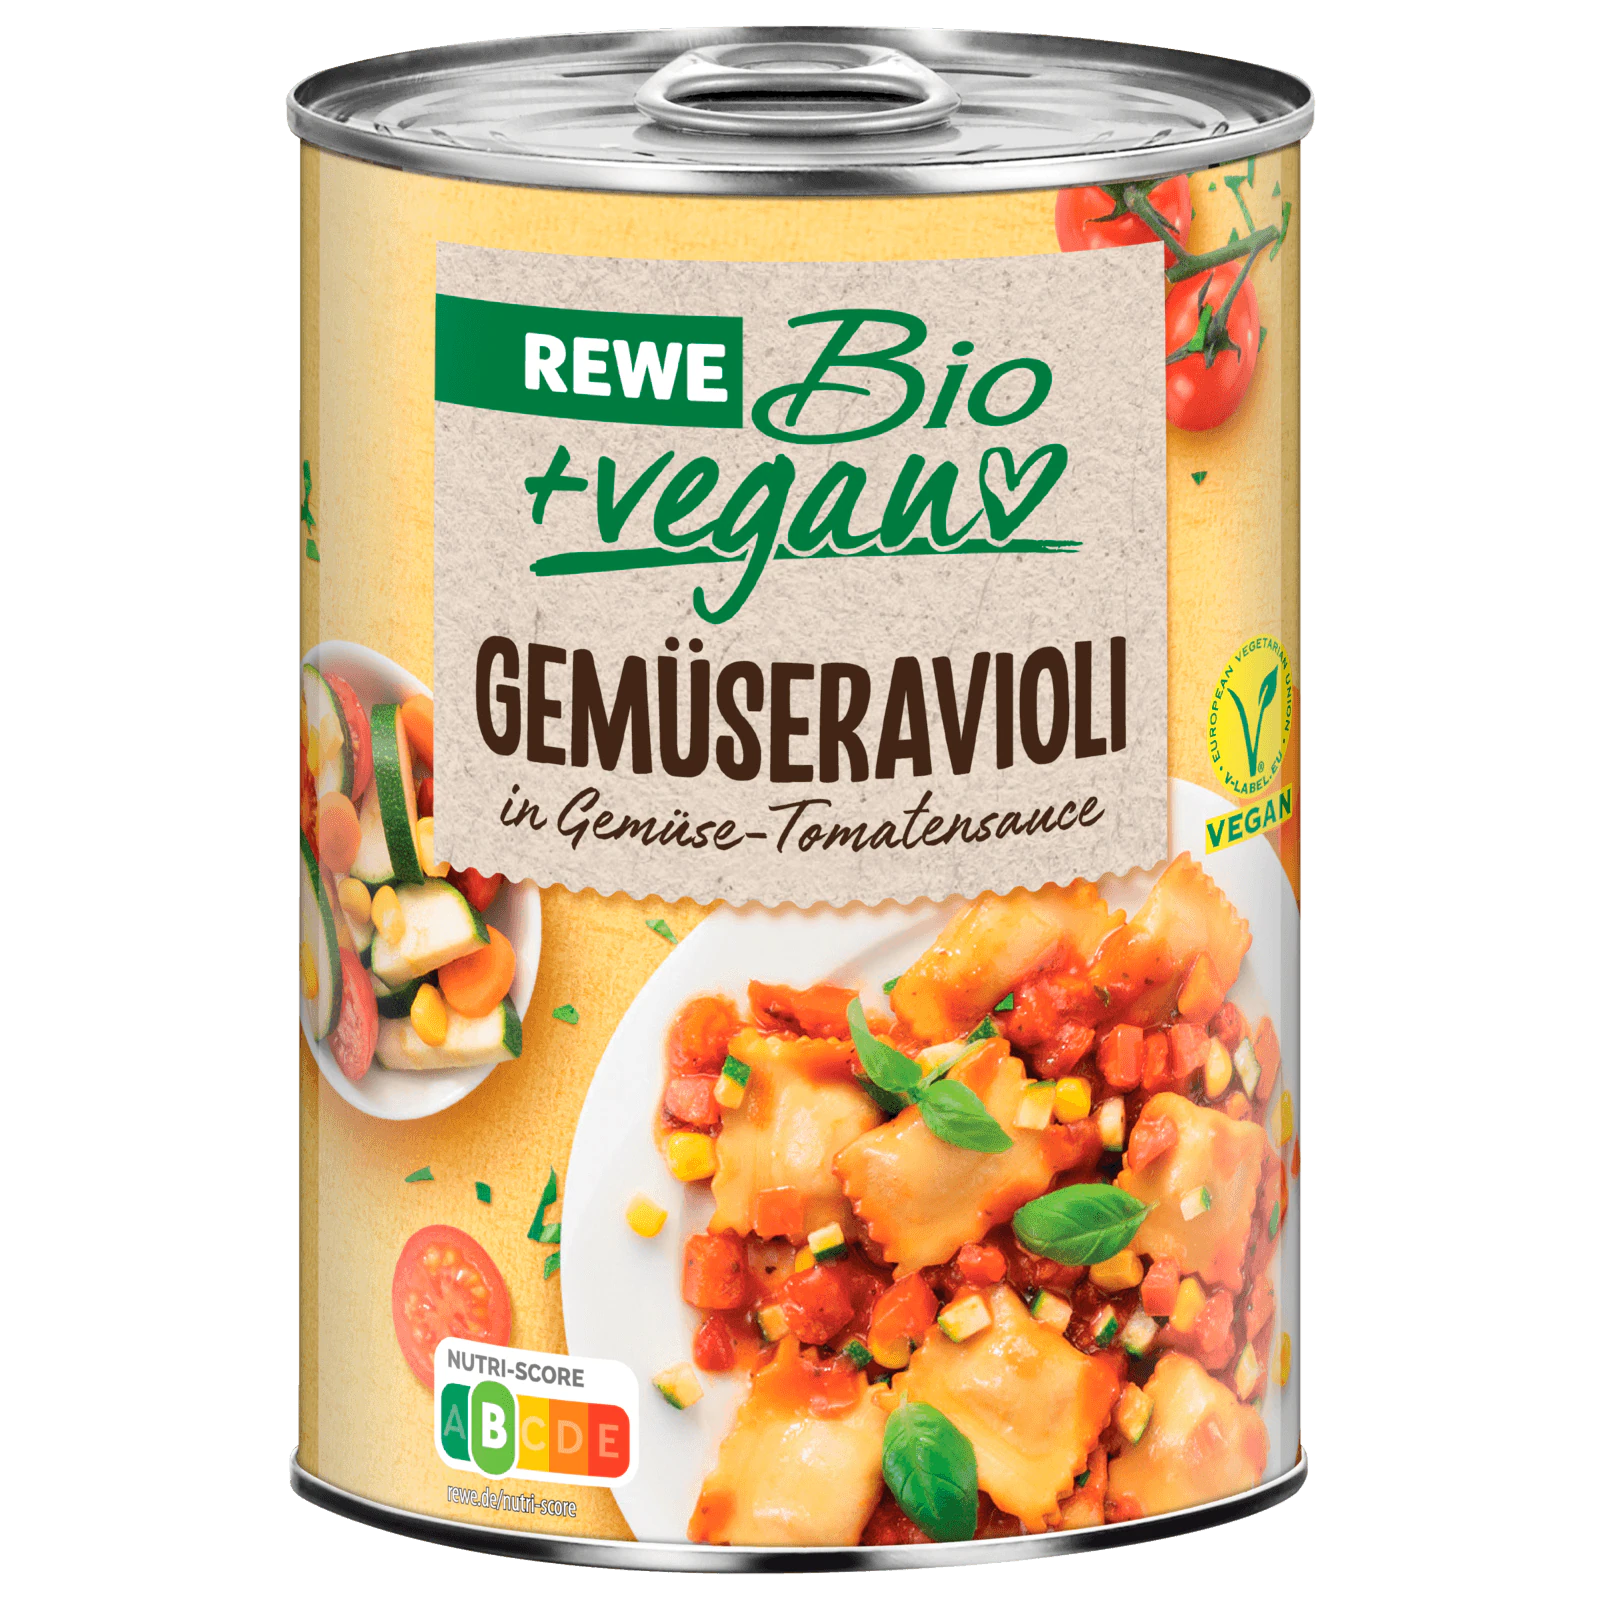 REWE Bio + vegan Gemüseravioli 400g